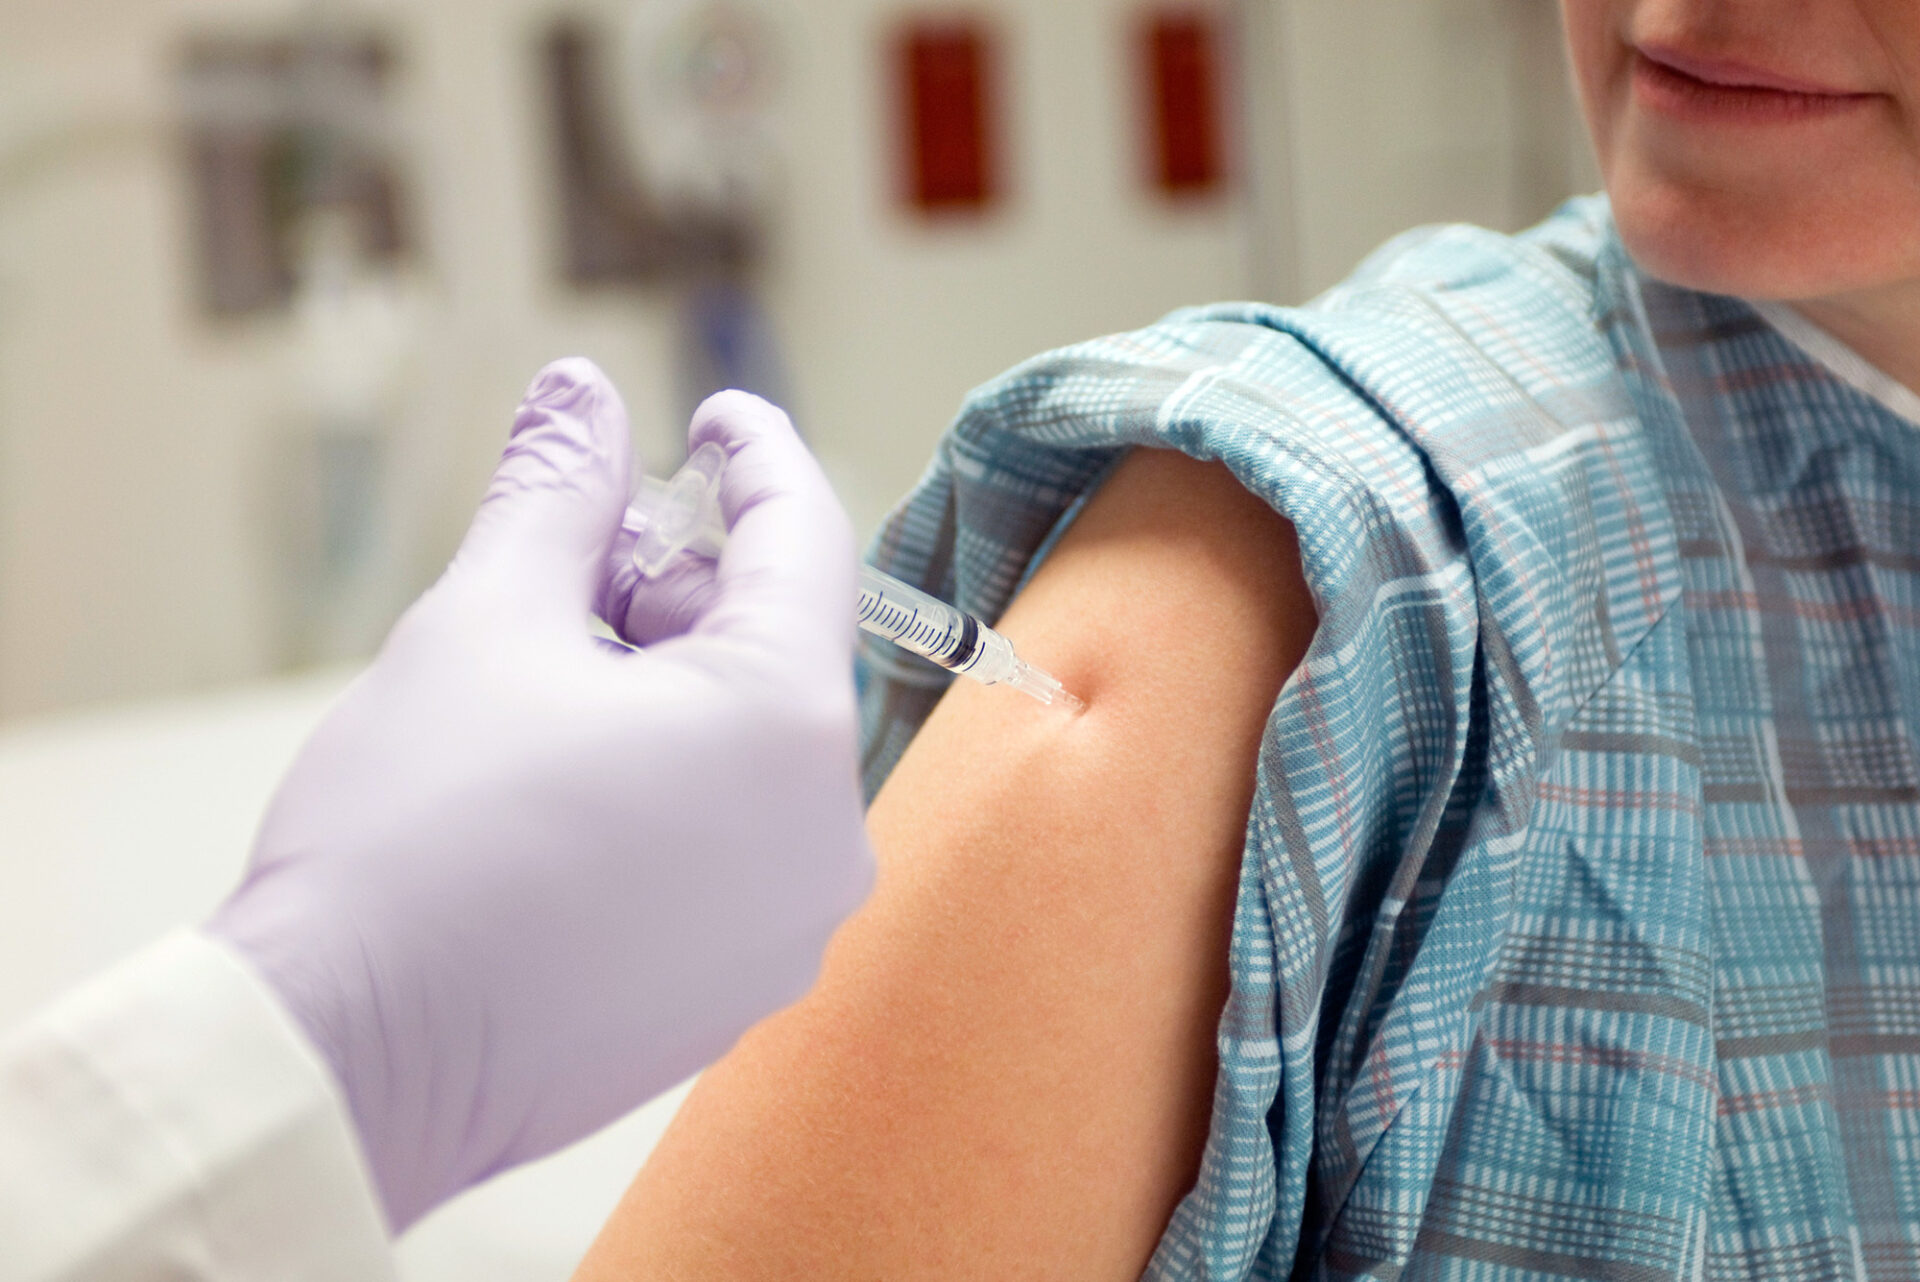 FDA Approves New Reformulated COVID-19 Vaccine